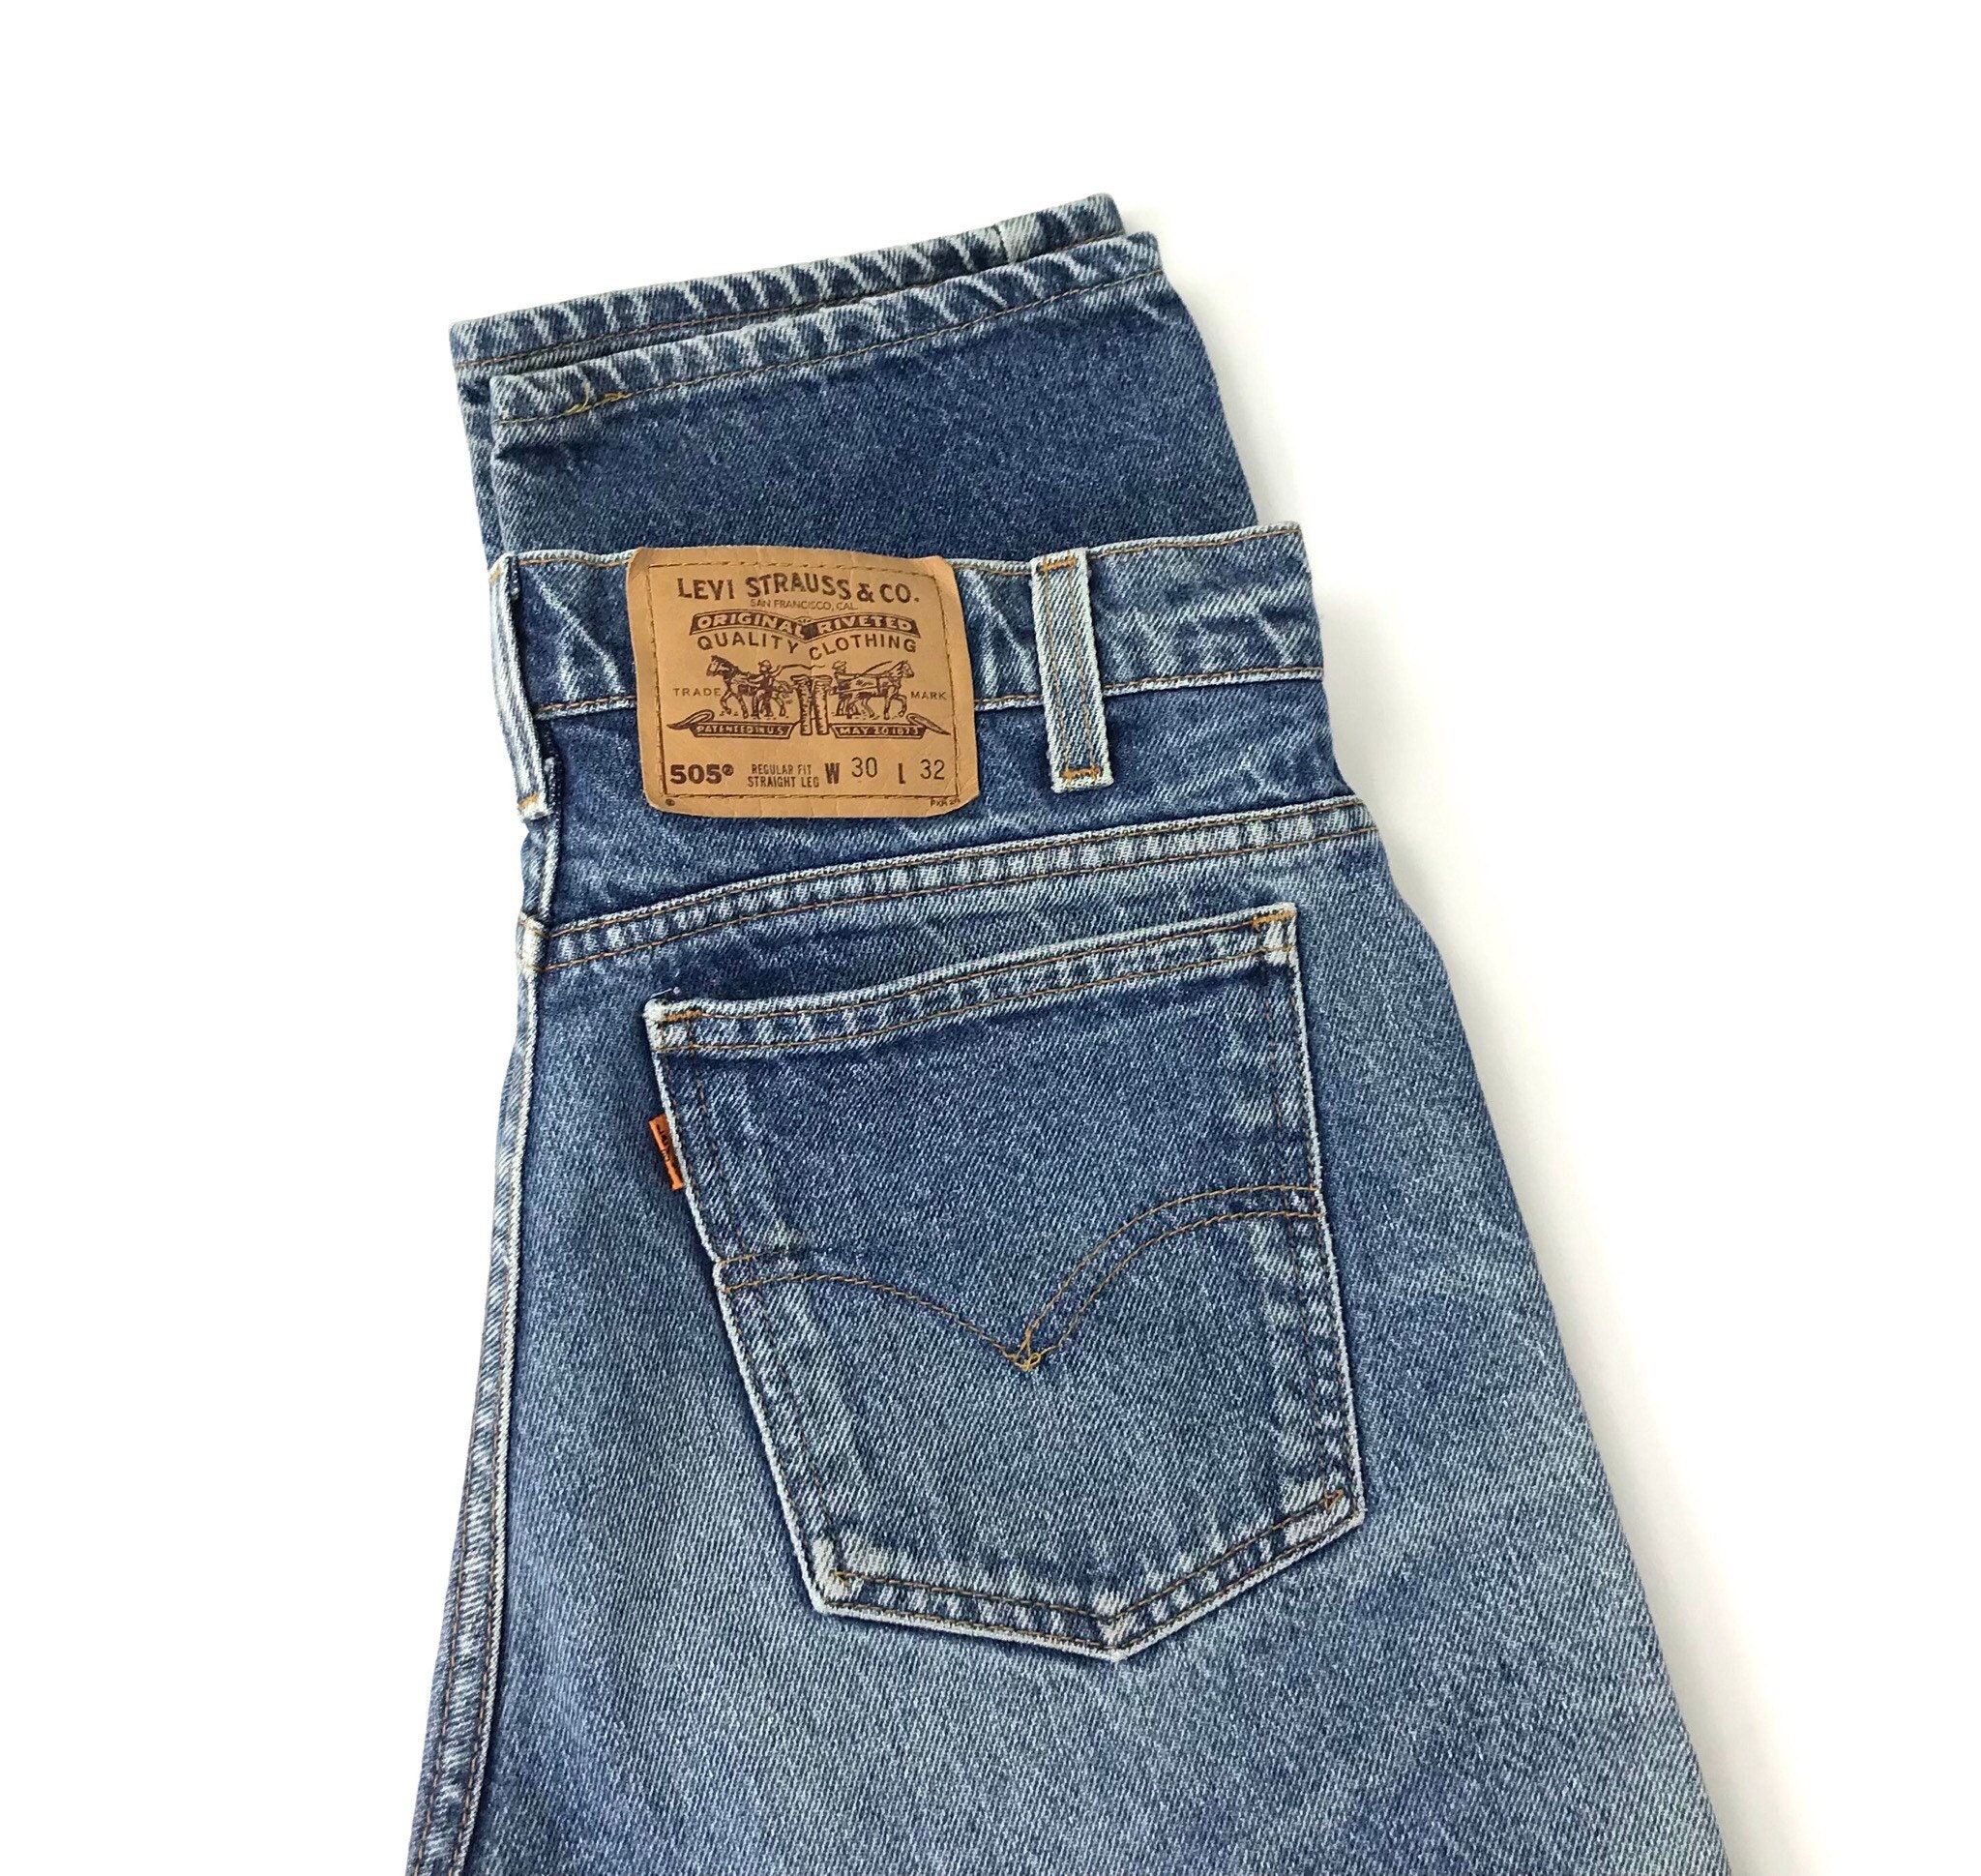 Levi's 505 Orange Tab Jeans / Size 28